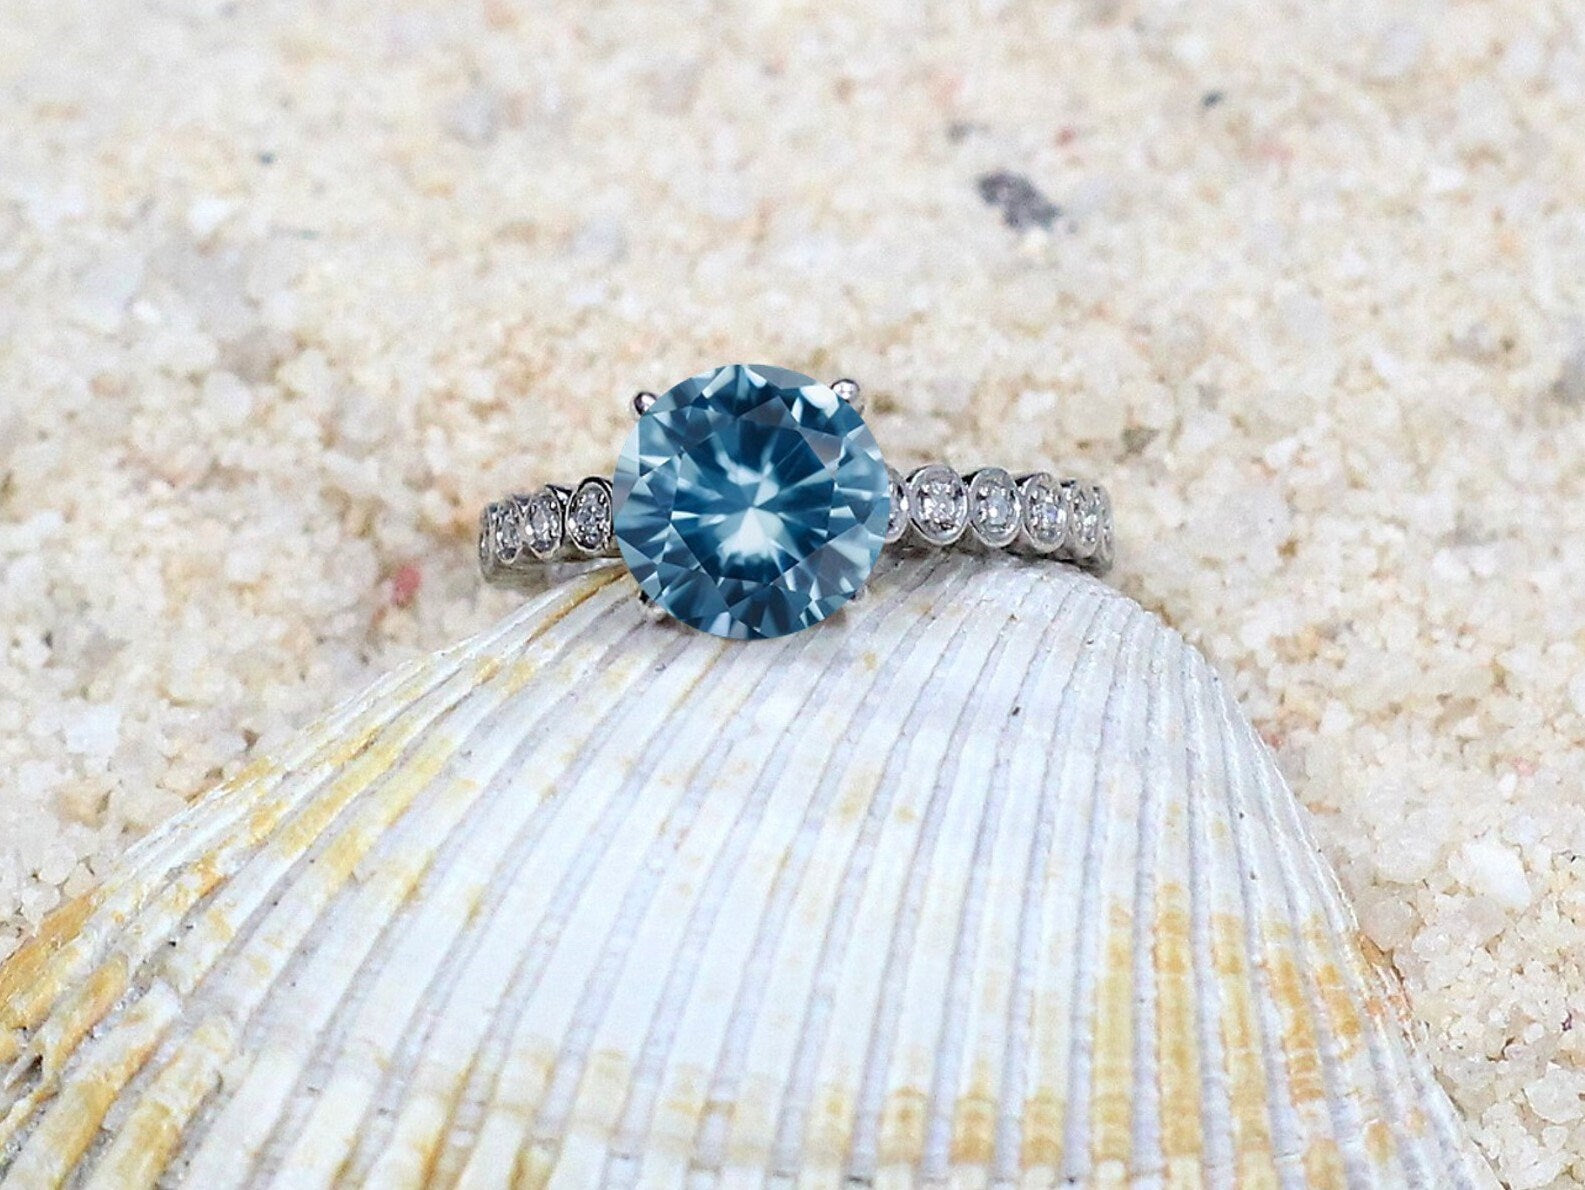 2ct Round Aquamarine Blue Spinel Engagement Ring, Vintage Ring, Milgrain Ring, Antique Ring, Ferarelle, Bridal Gold Ring, March Birthstone BellaMoreDesign.com